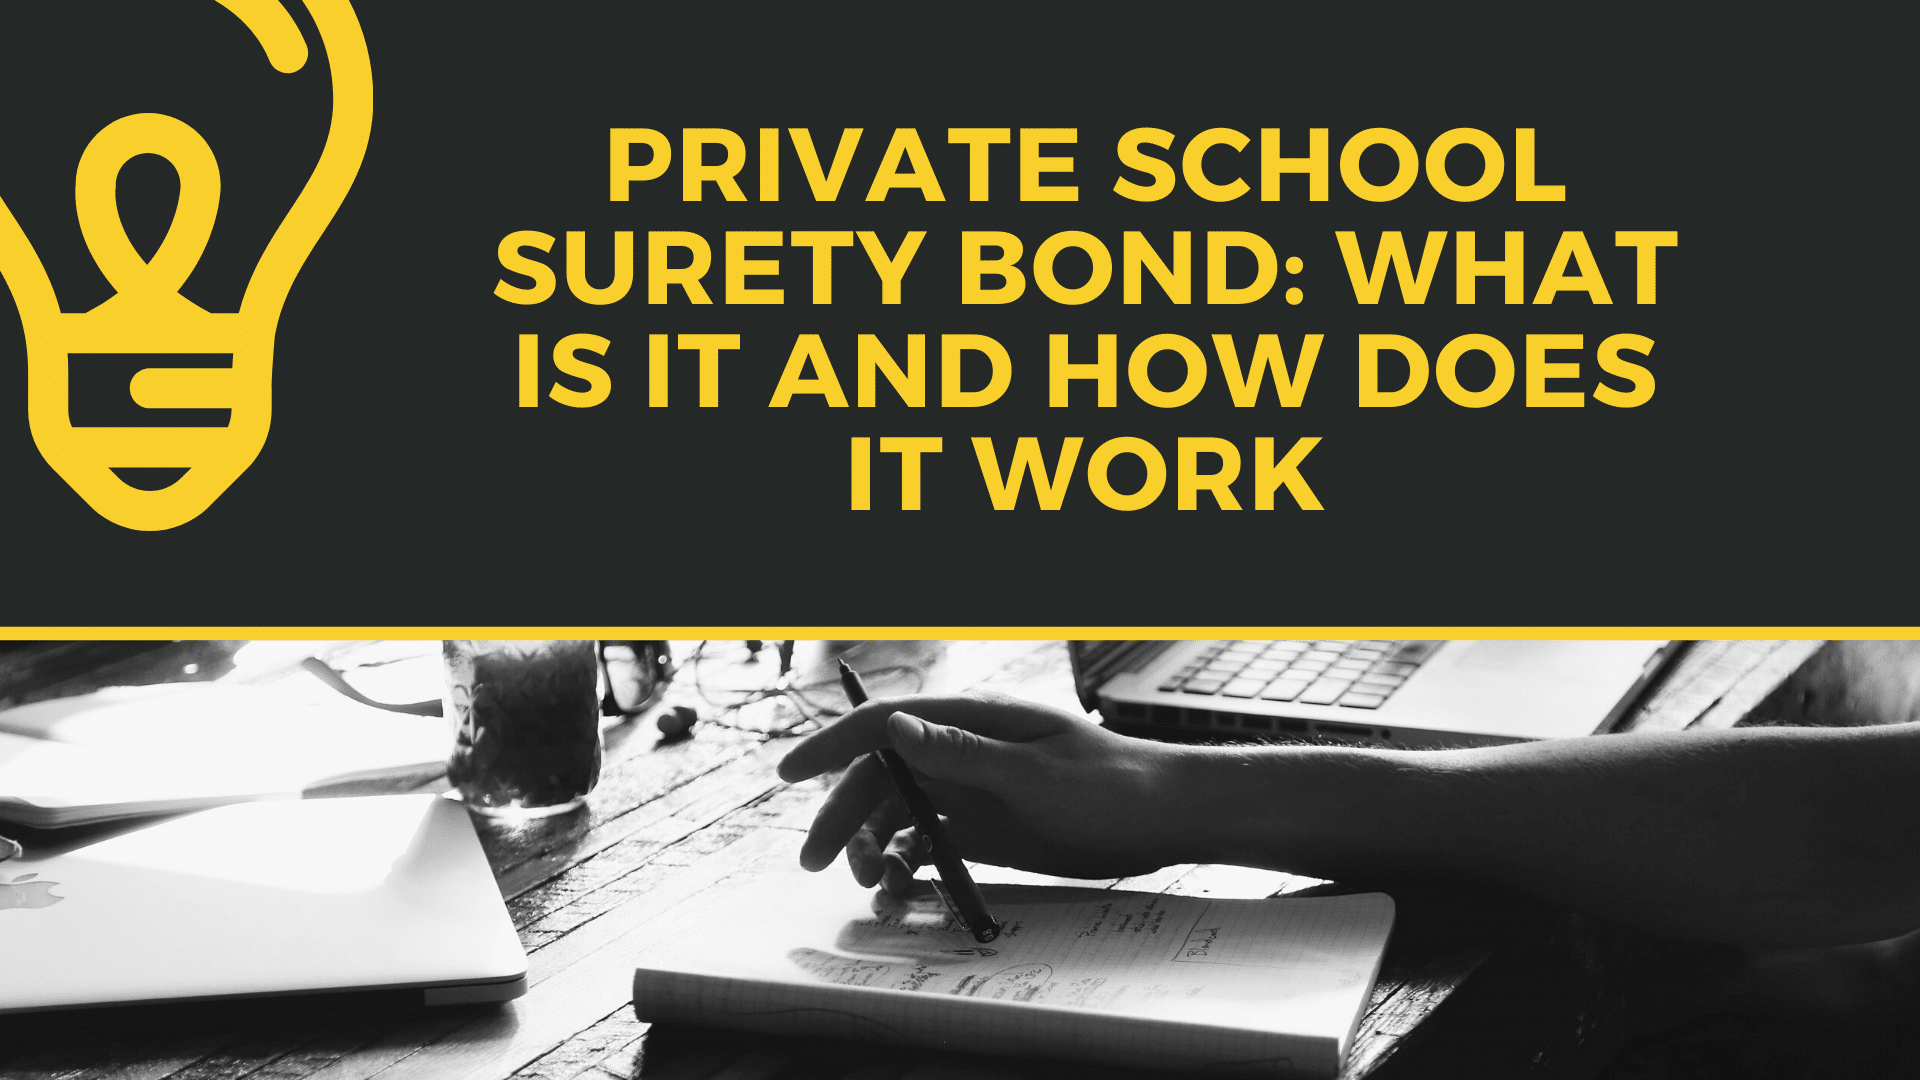 surety bond - What Is a Private School Bond (School Bond) - hand holding a pen